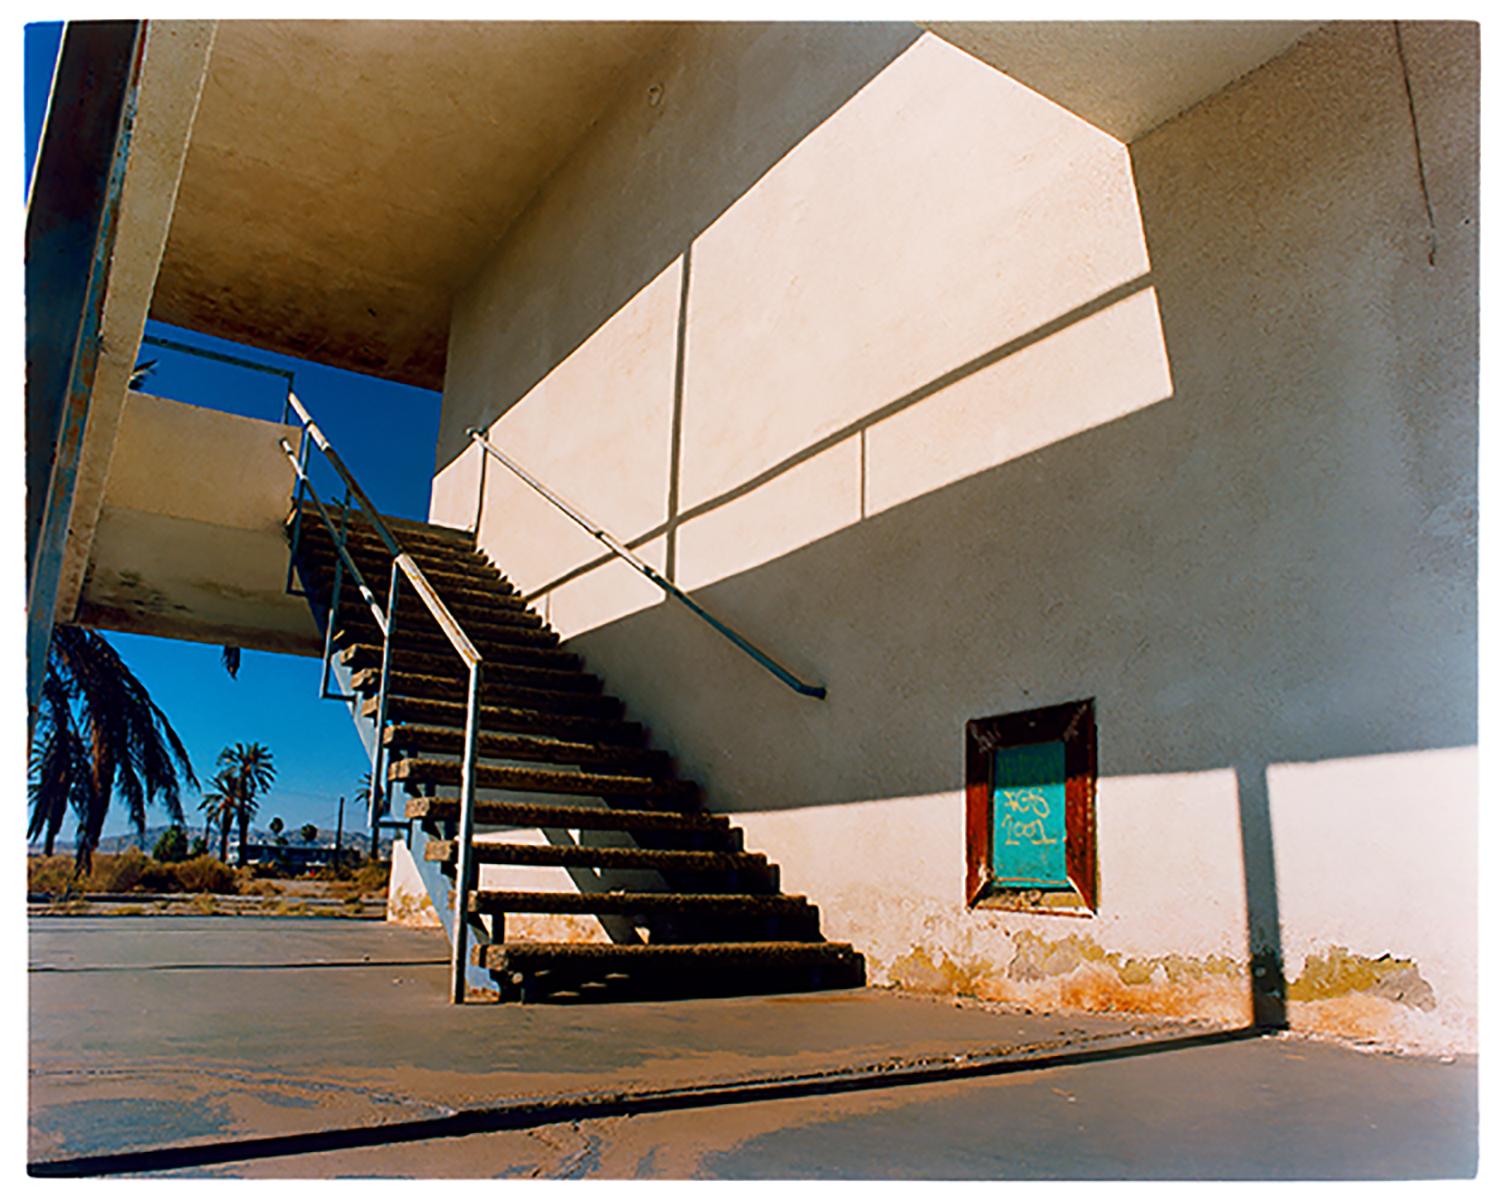 Richard Heeps Color Photograph - North Shore Motel Steps, Salton Sea, California - Architectural color photo